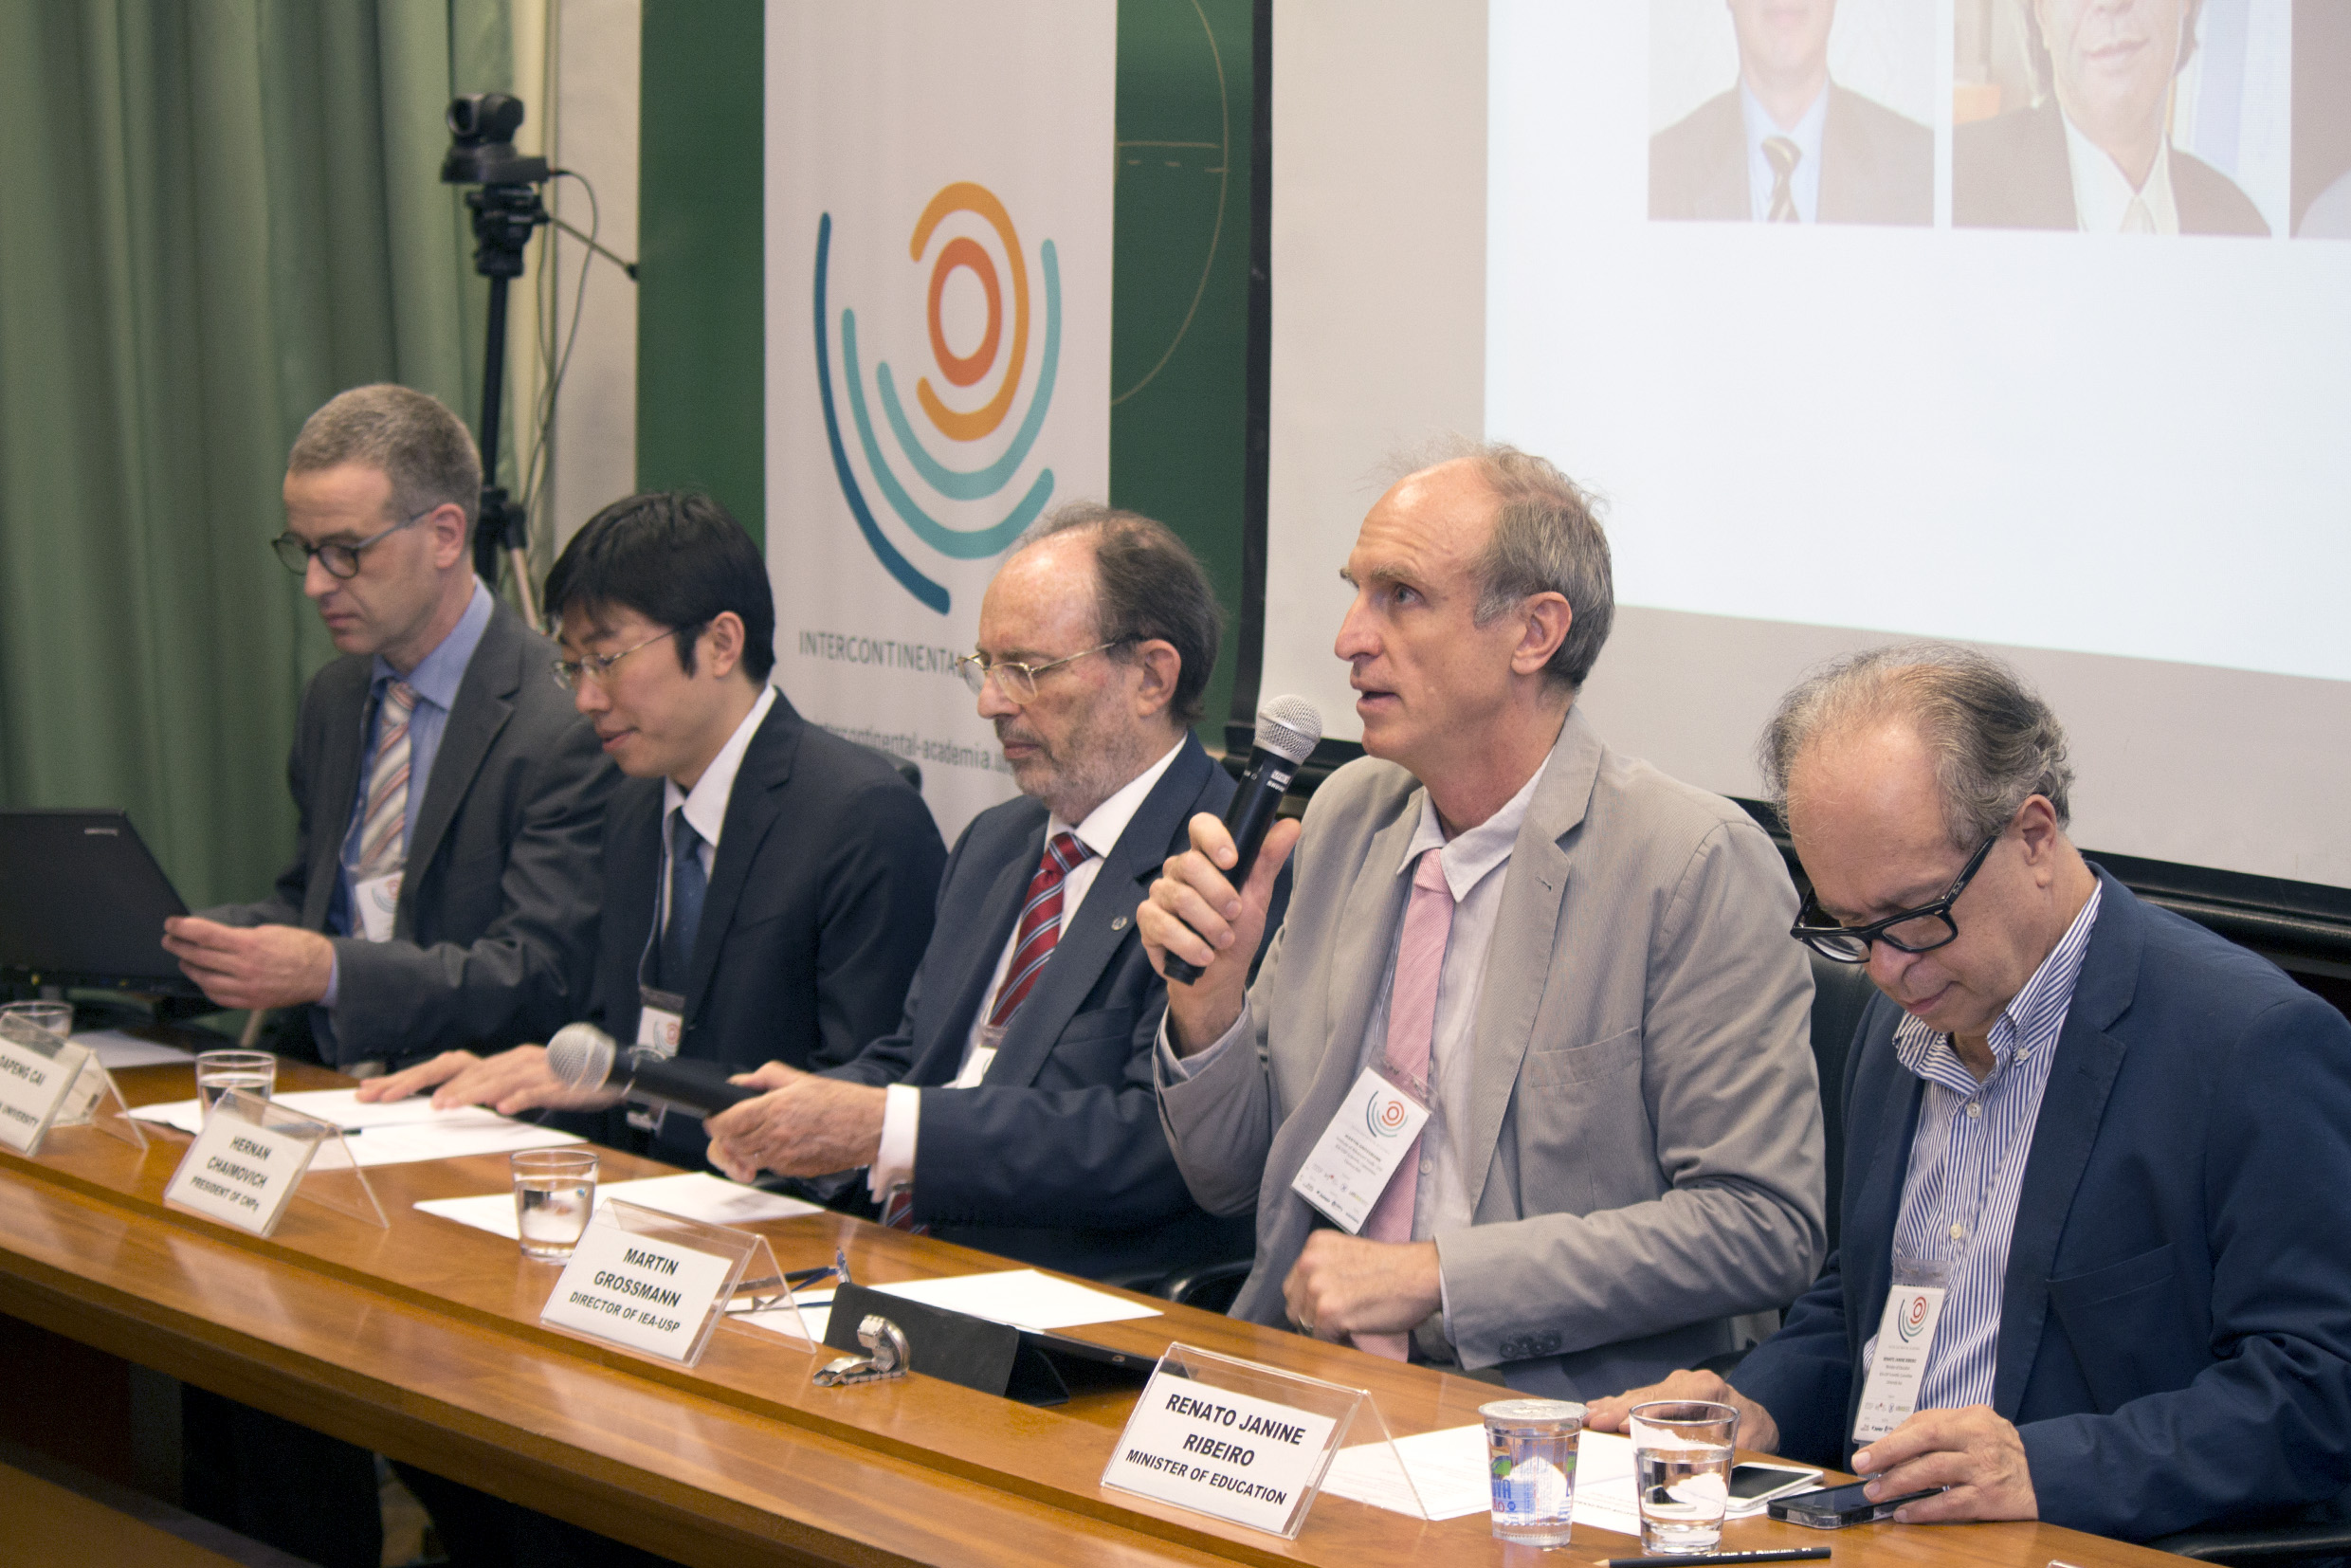 Carsten Dose, Dapeng Cai, Hernan Chaimovich, Martin Grossmann and Minister Renato Janine Ribeiro